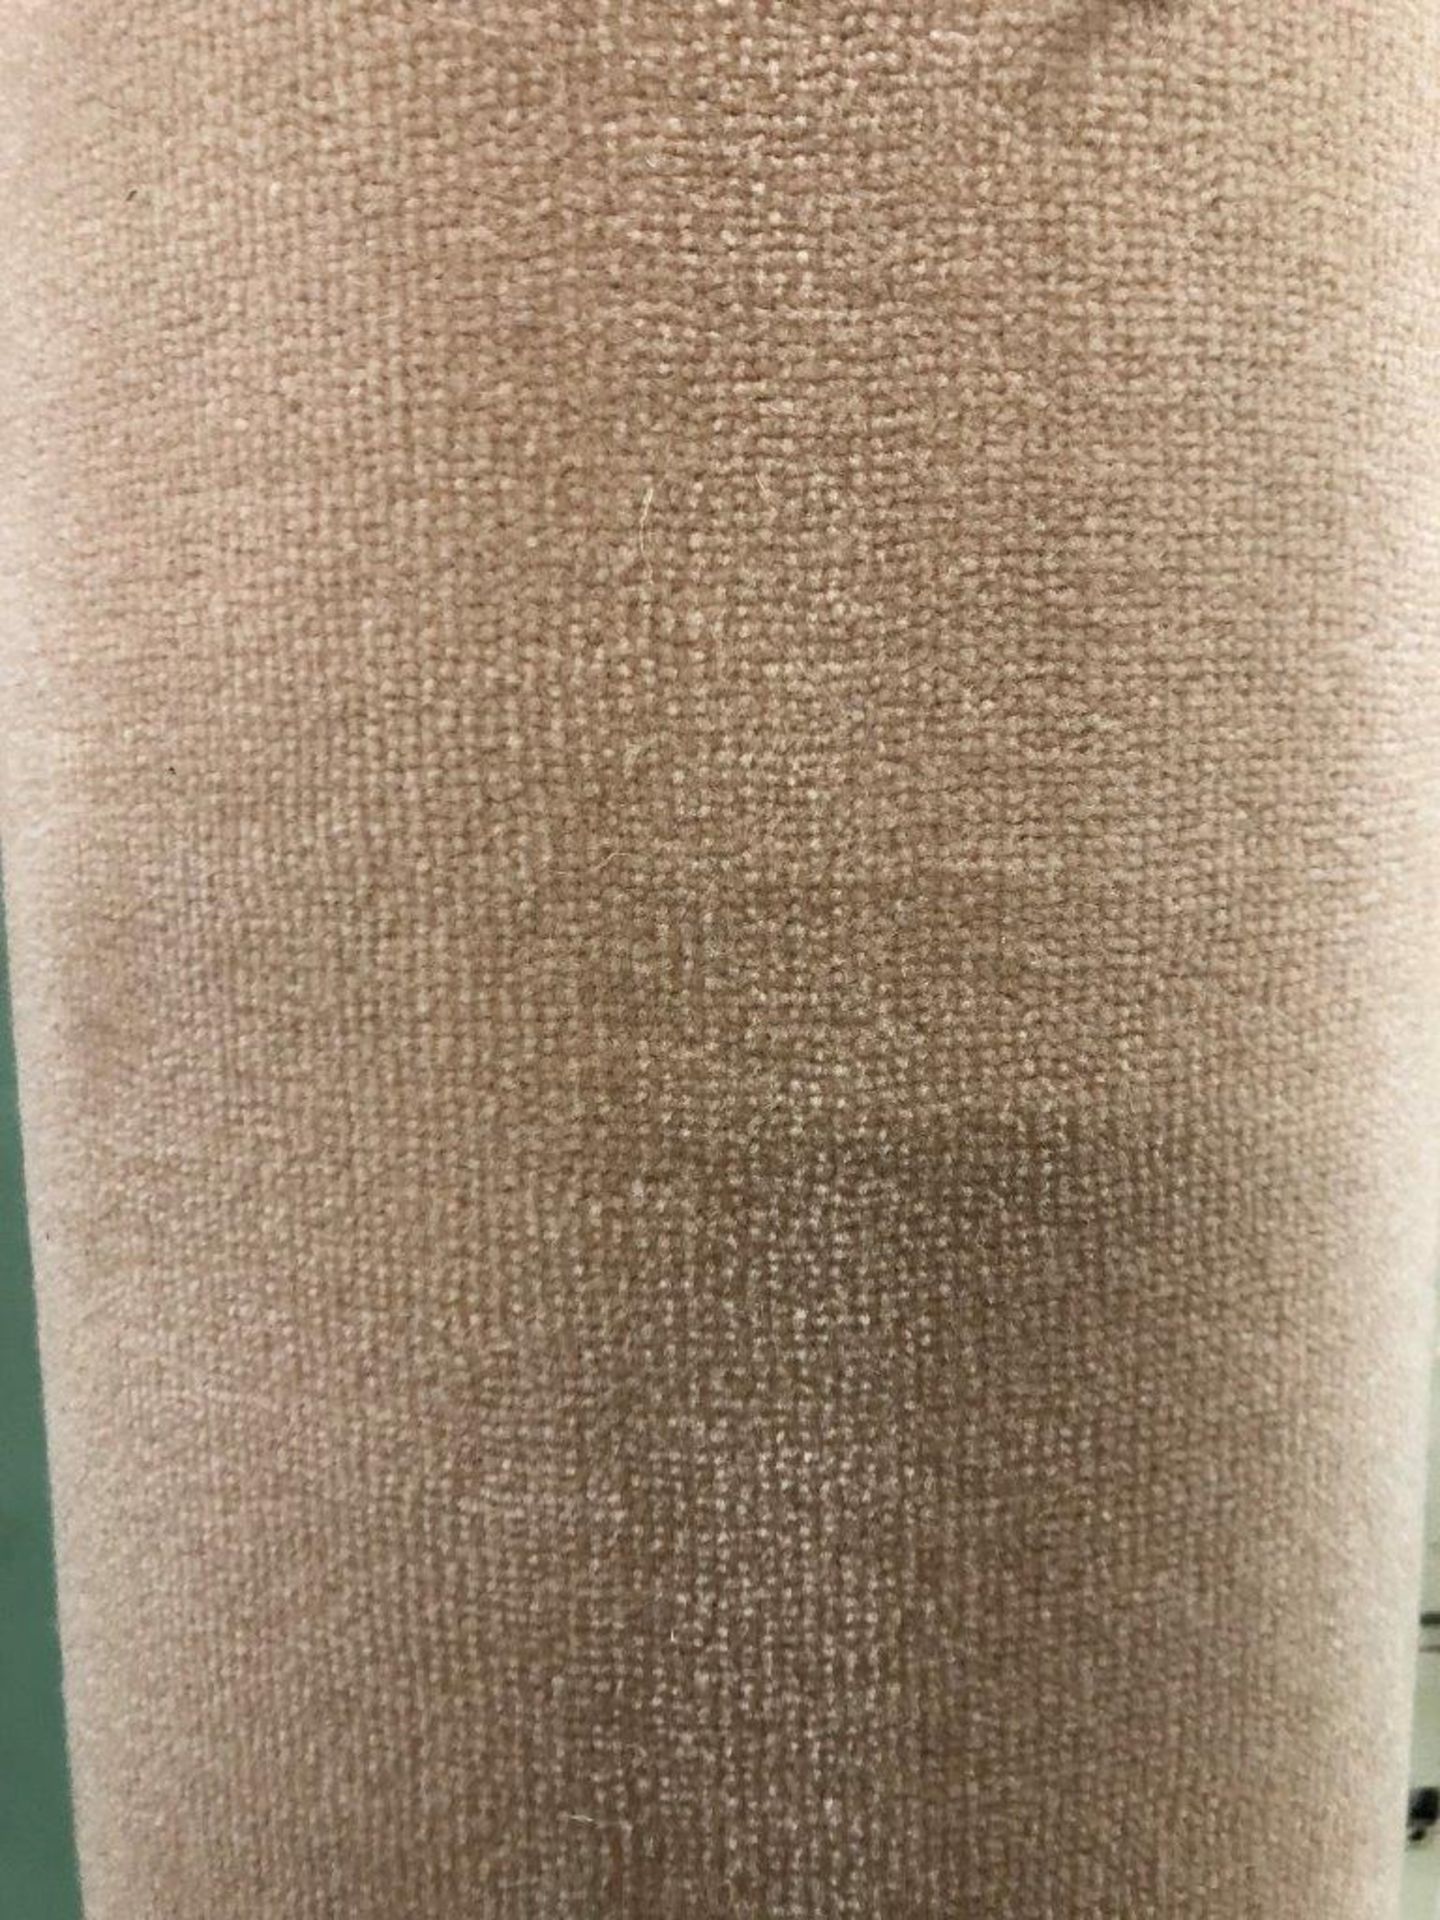 1 x Ryalux Carpet End Roll - Cream 5.0x2.2m2 - Image 3 of 3